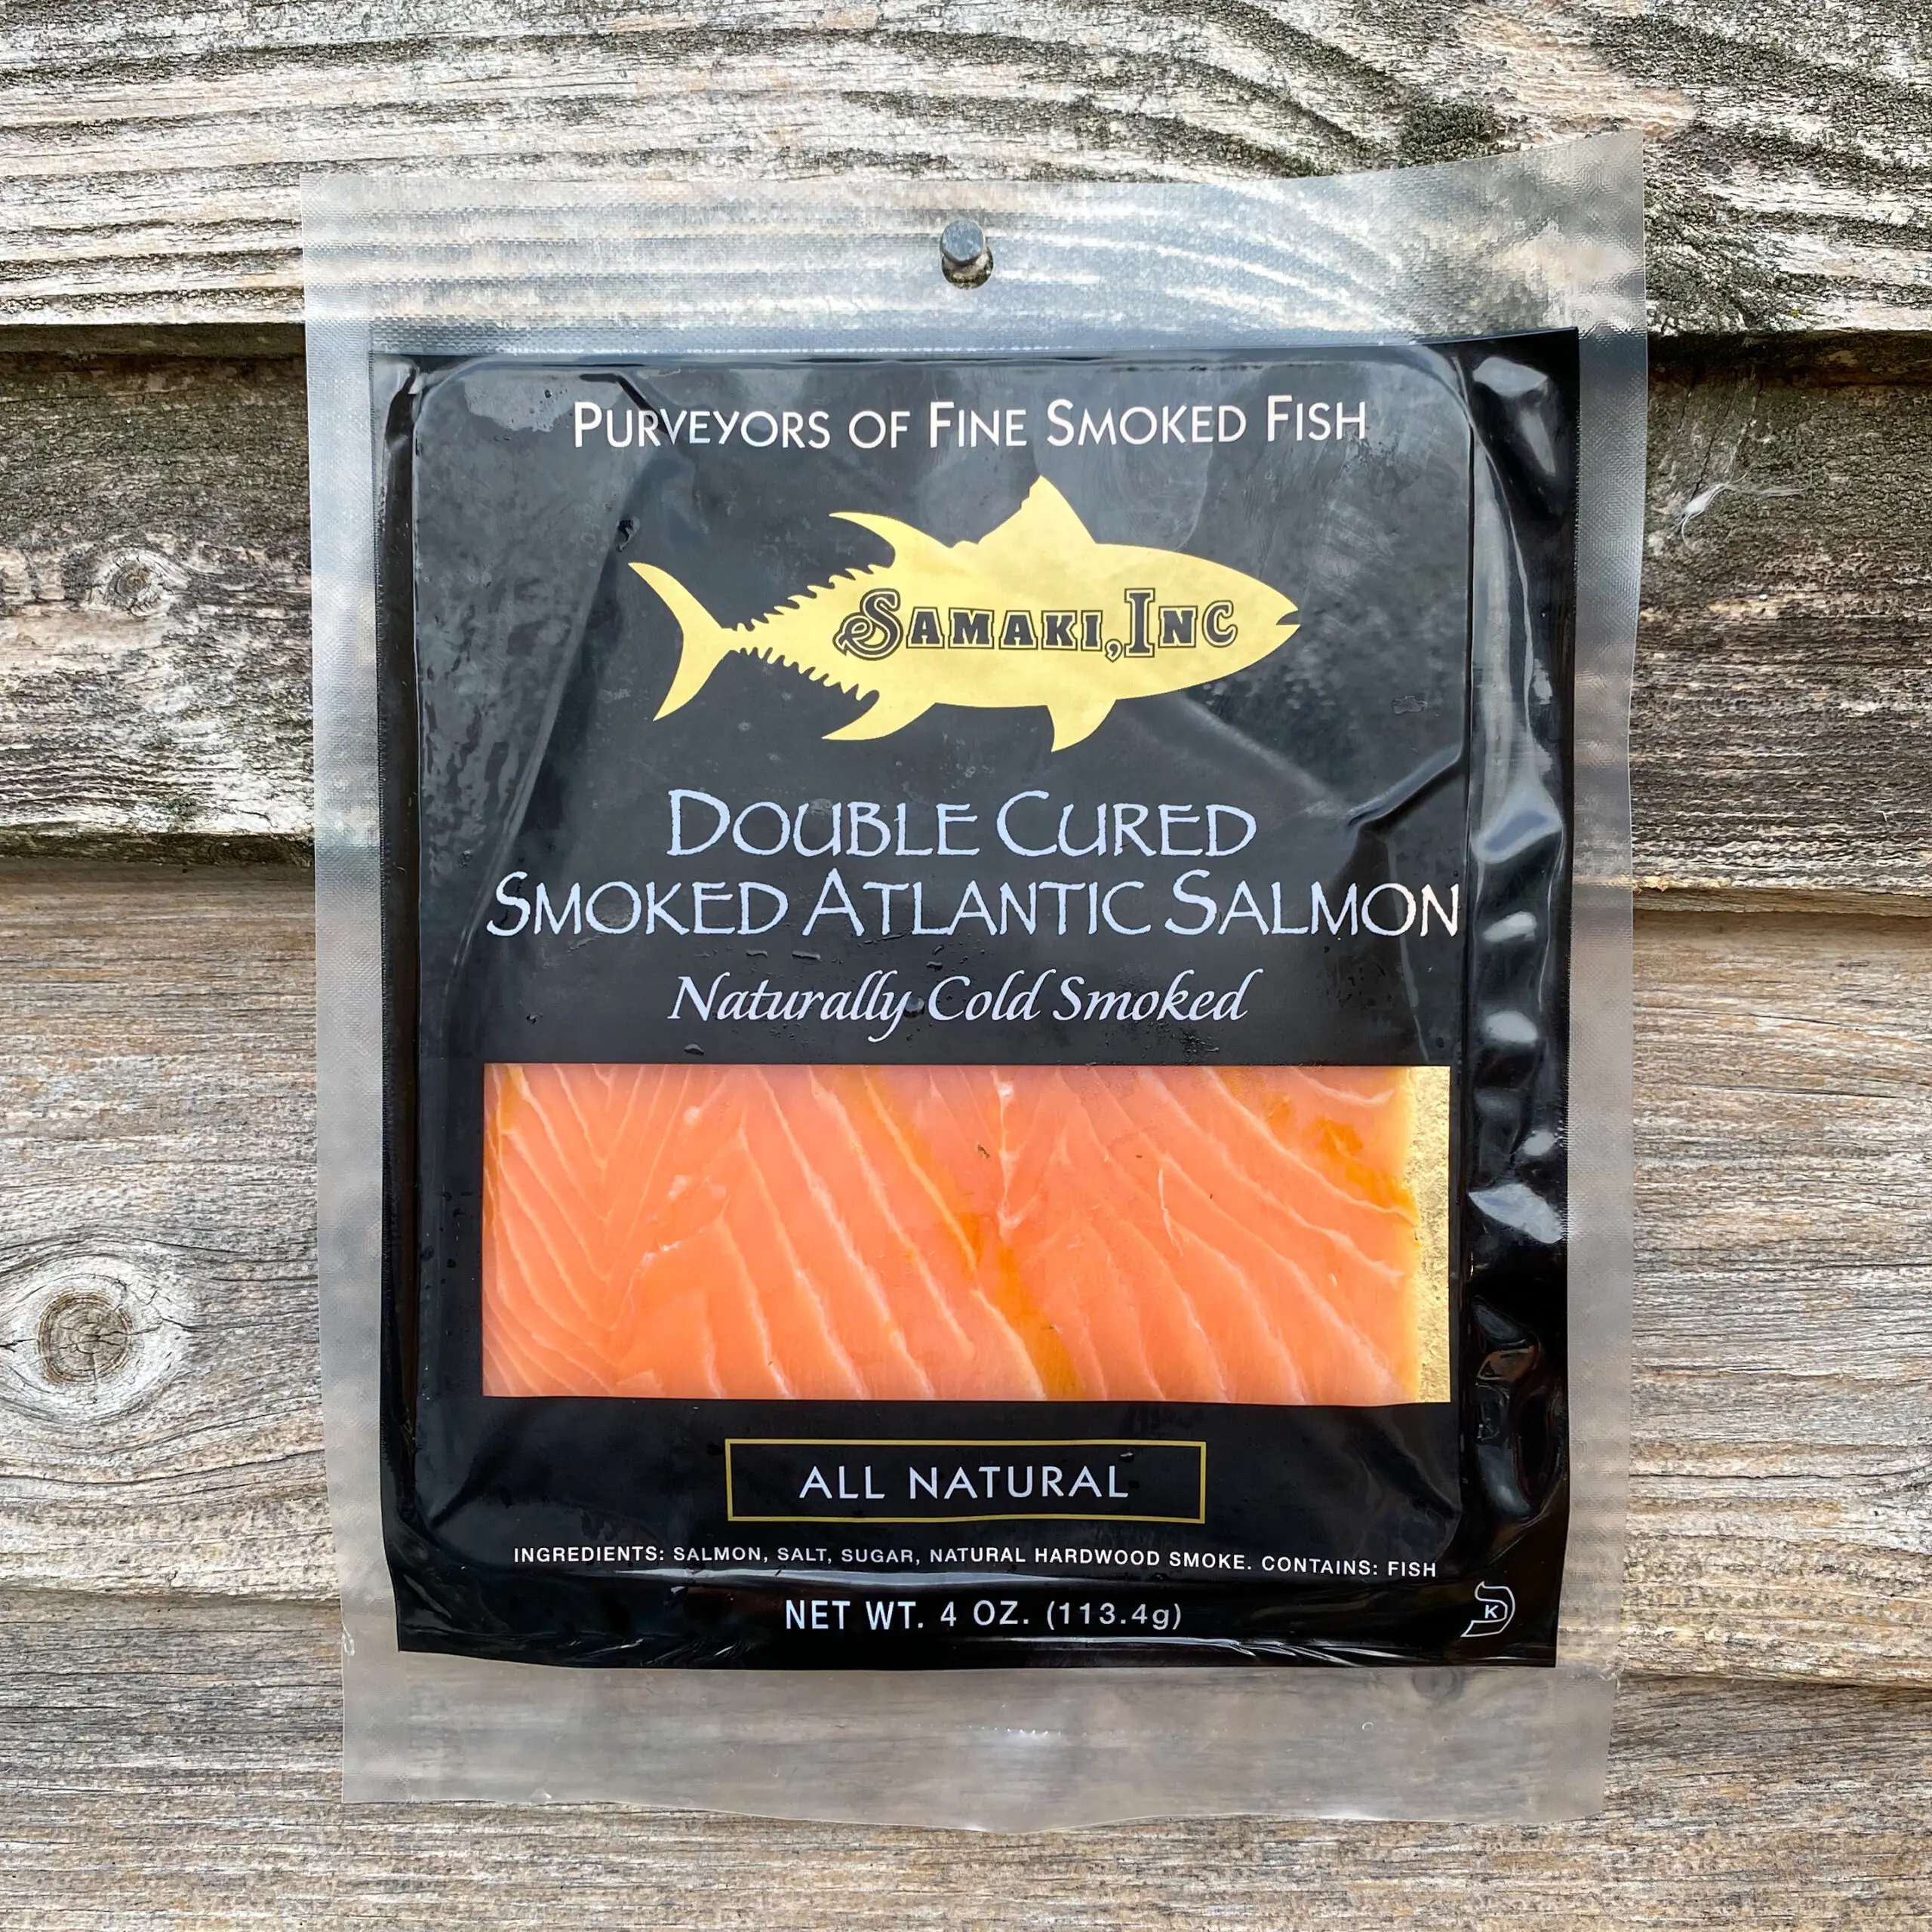 smoked atlantic salmon - Is smoked Atlantic salmon ready to eat